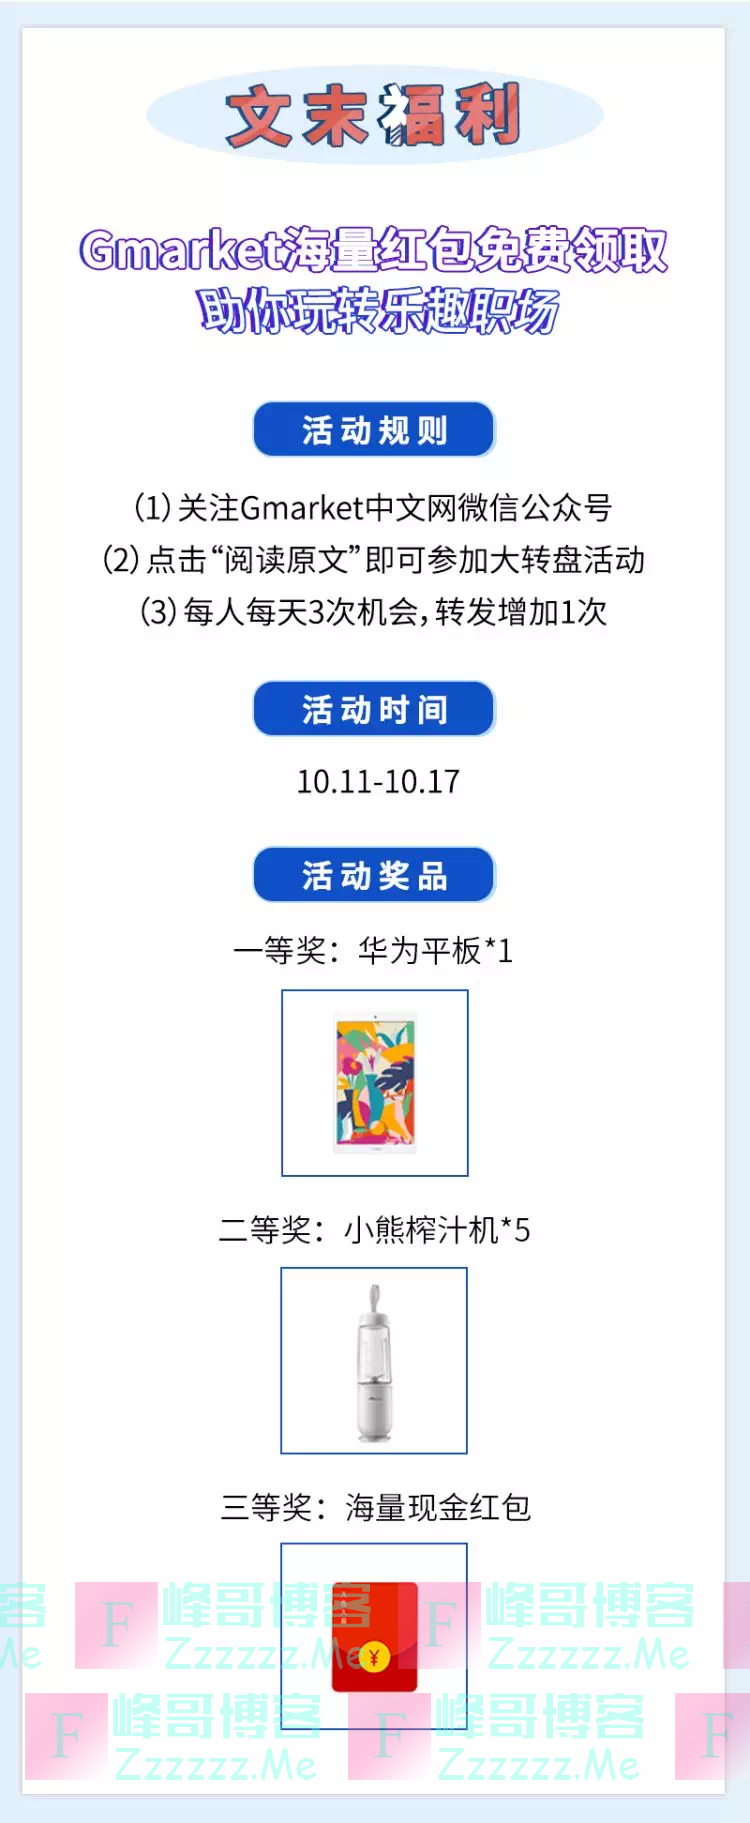 Gmarket中文网玩转乐趣职场，海量红包大放送（10月17日截止）